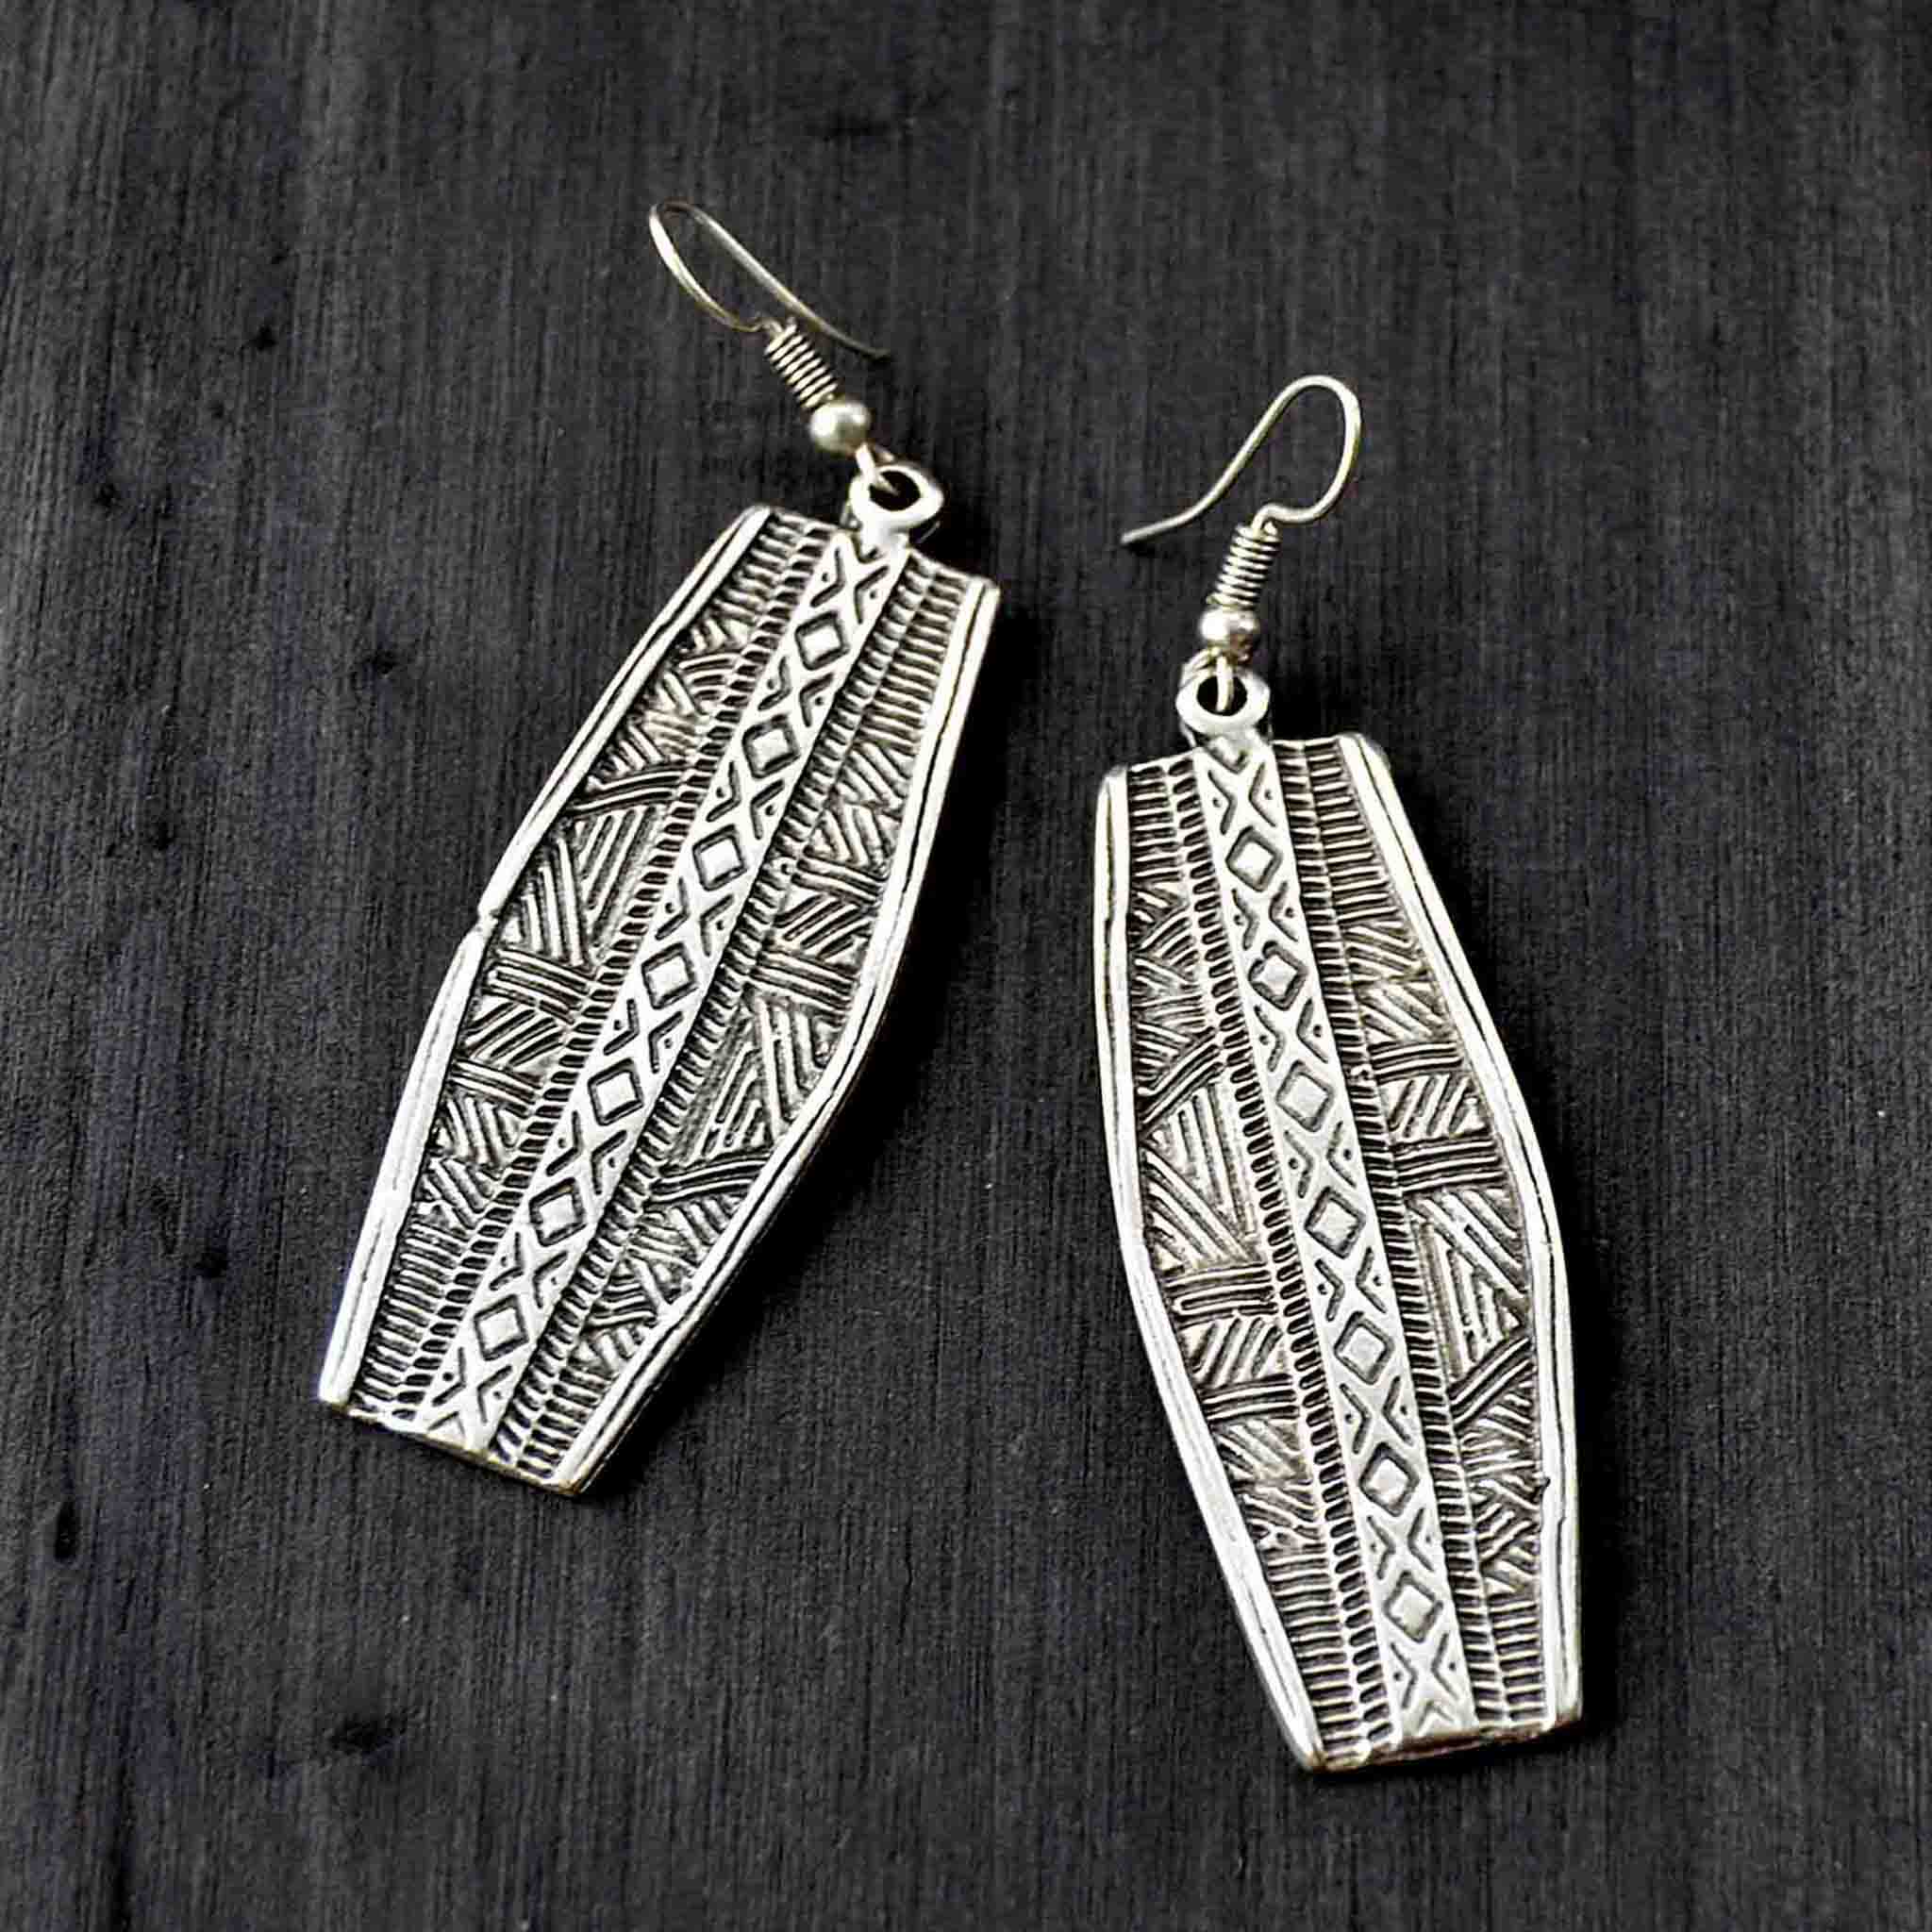 Silver long earrings with engraved geometric motifs